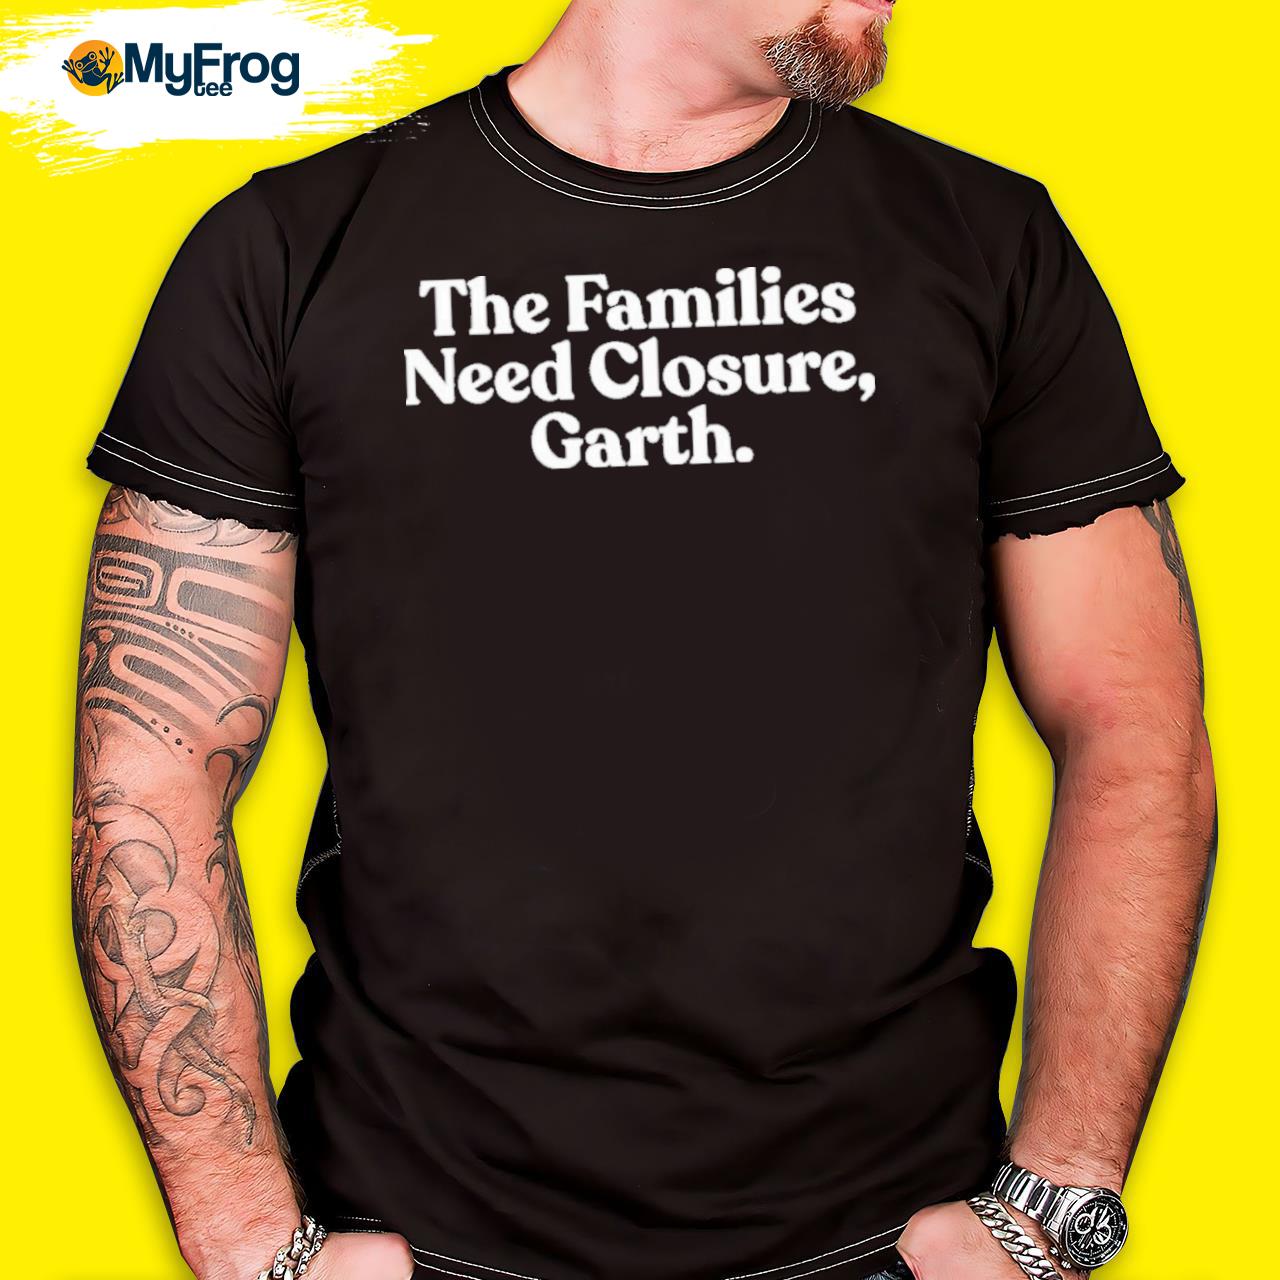 The families need closure garth shirt